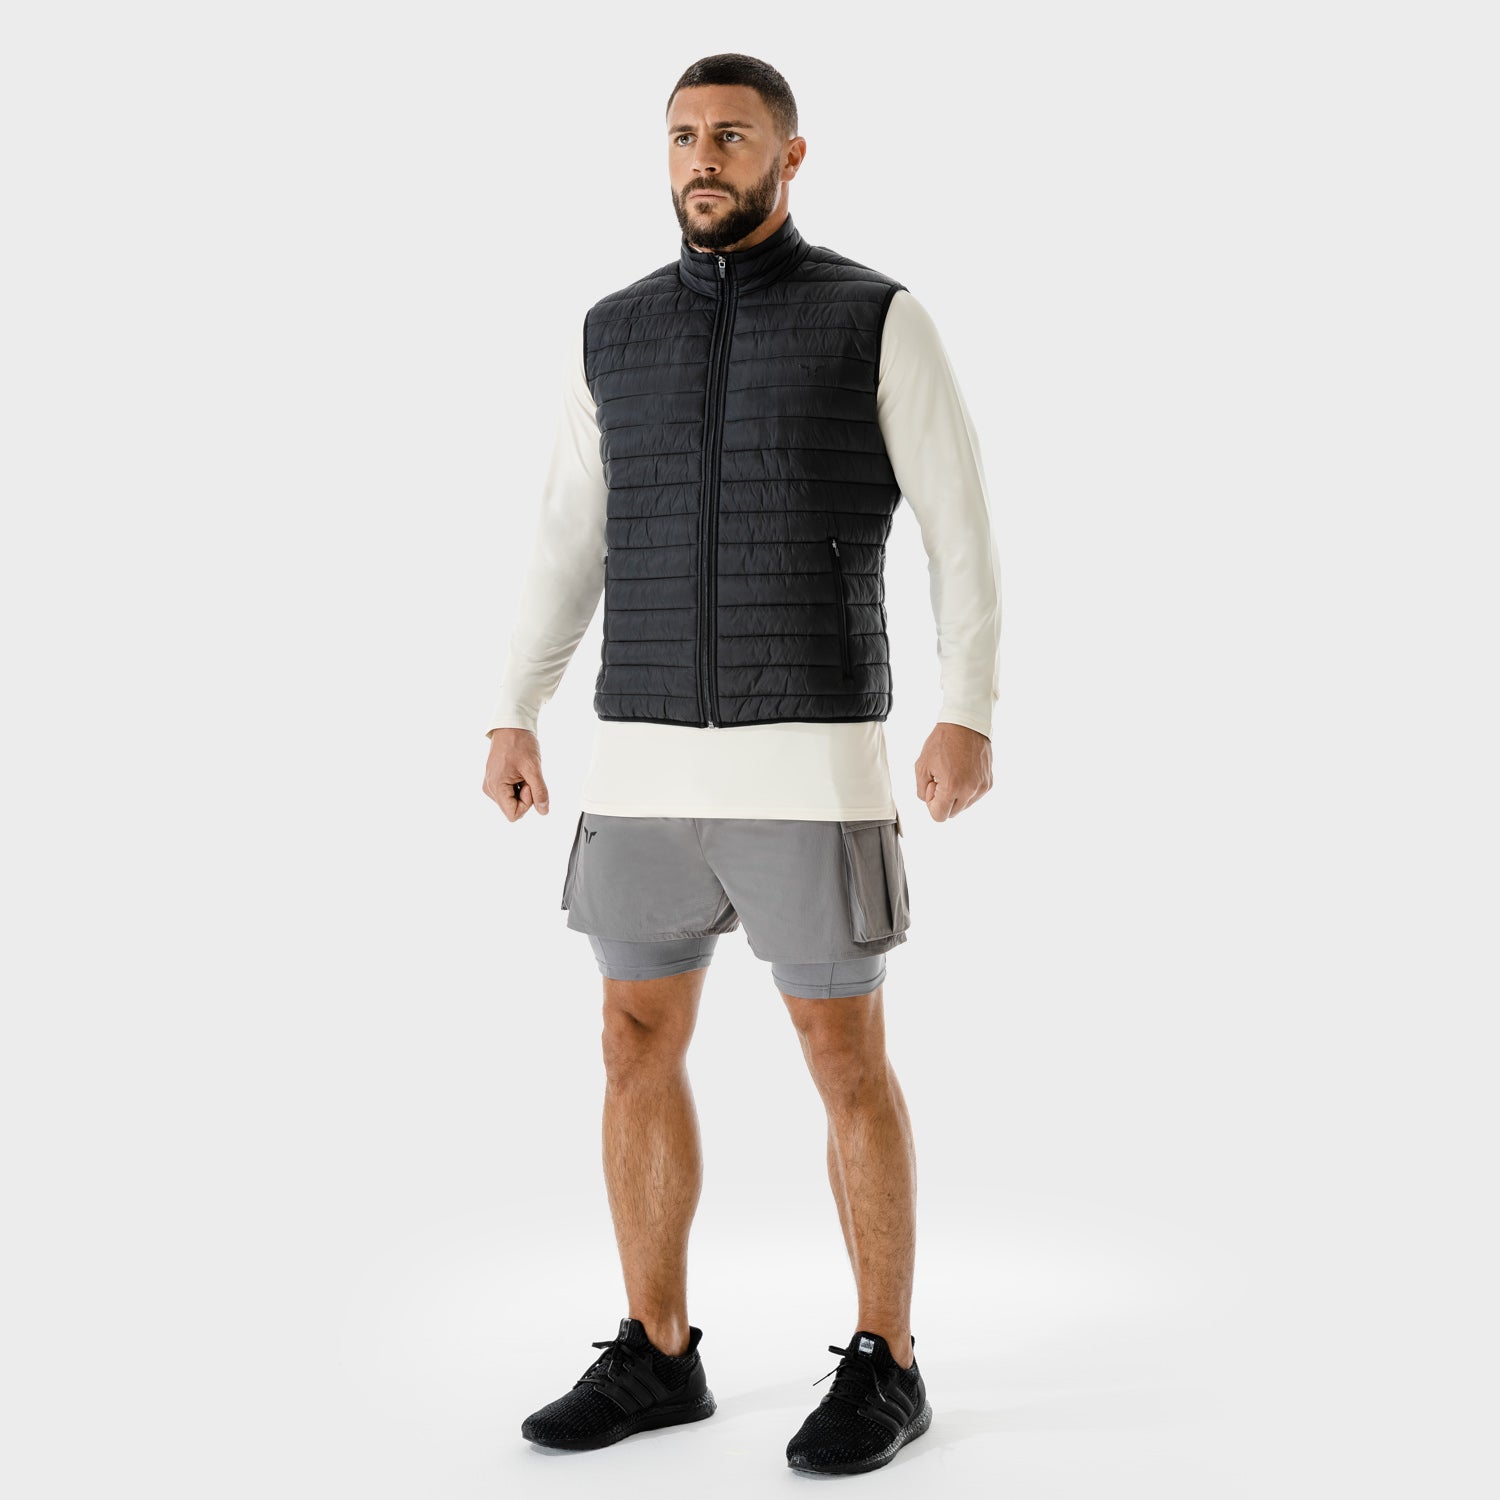 squatwolf-running-gilet-code-body-vest-black-gym-clothes-for-men